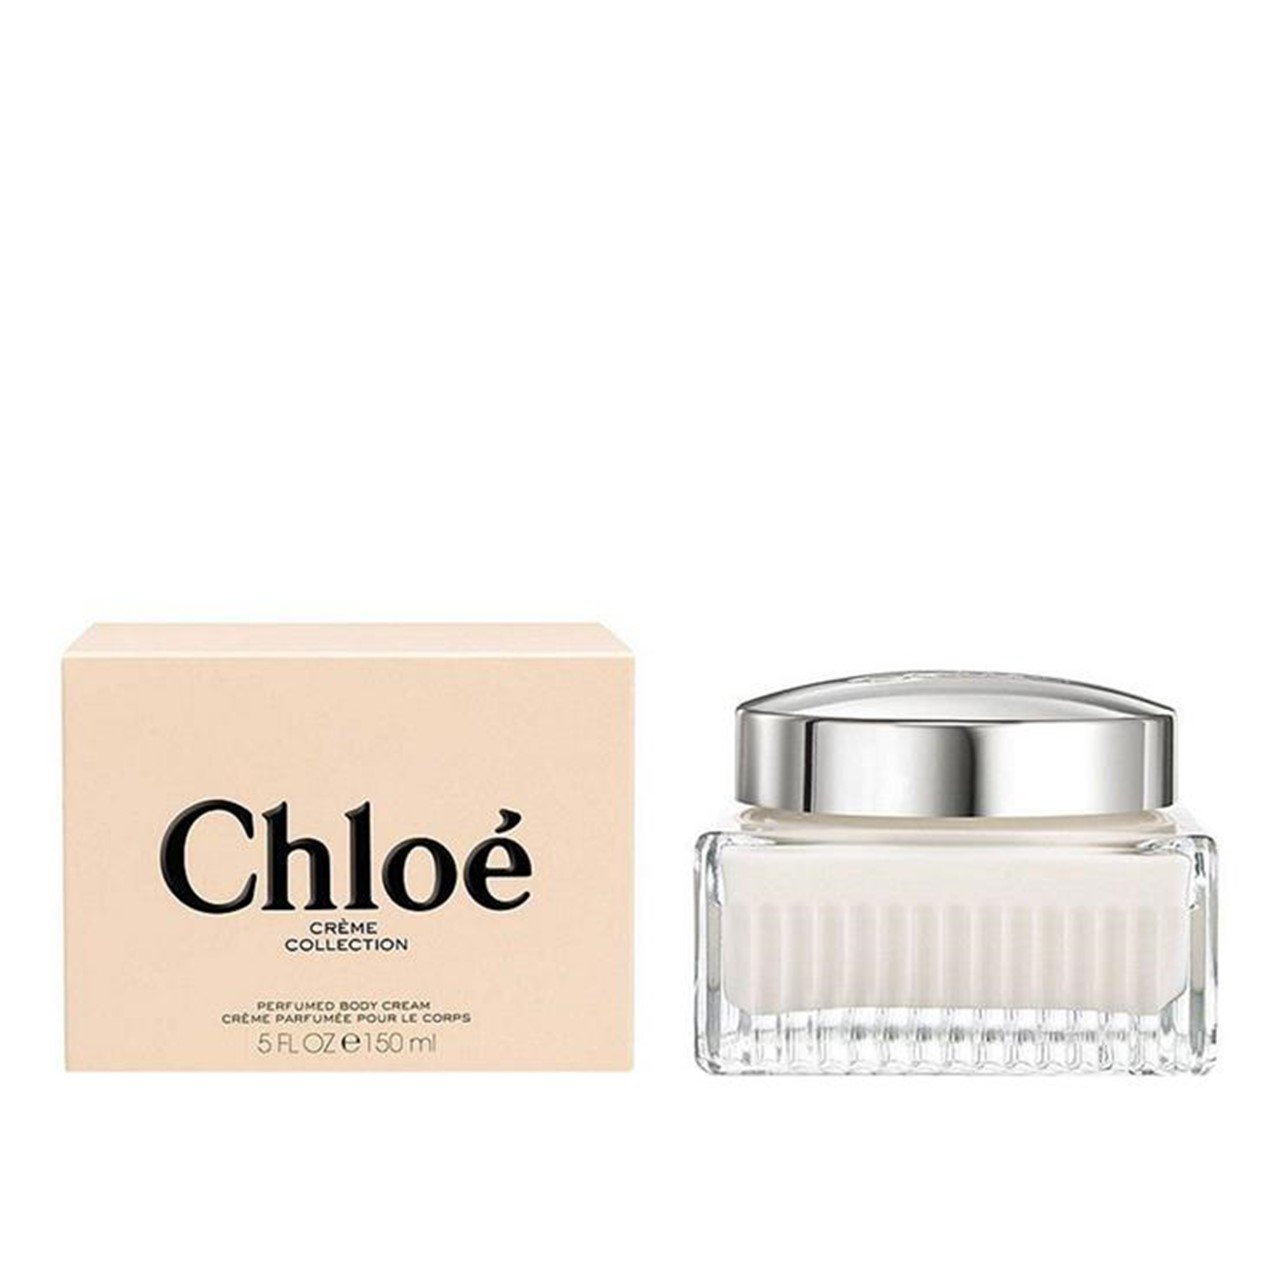 Chloé Crème Collection Perfumed Body Cream 150ml (5.07fl oz)